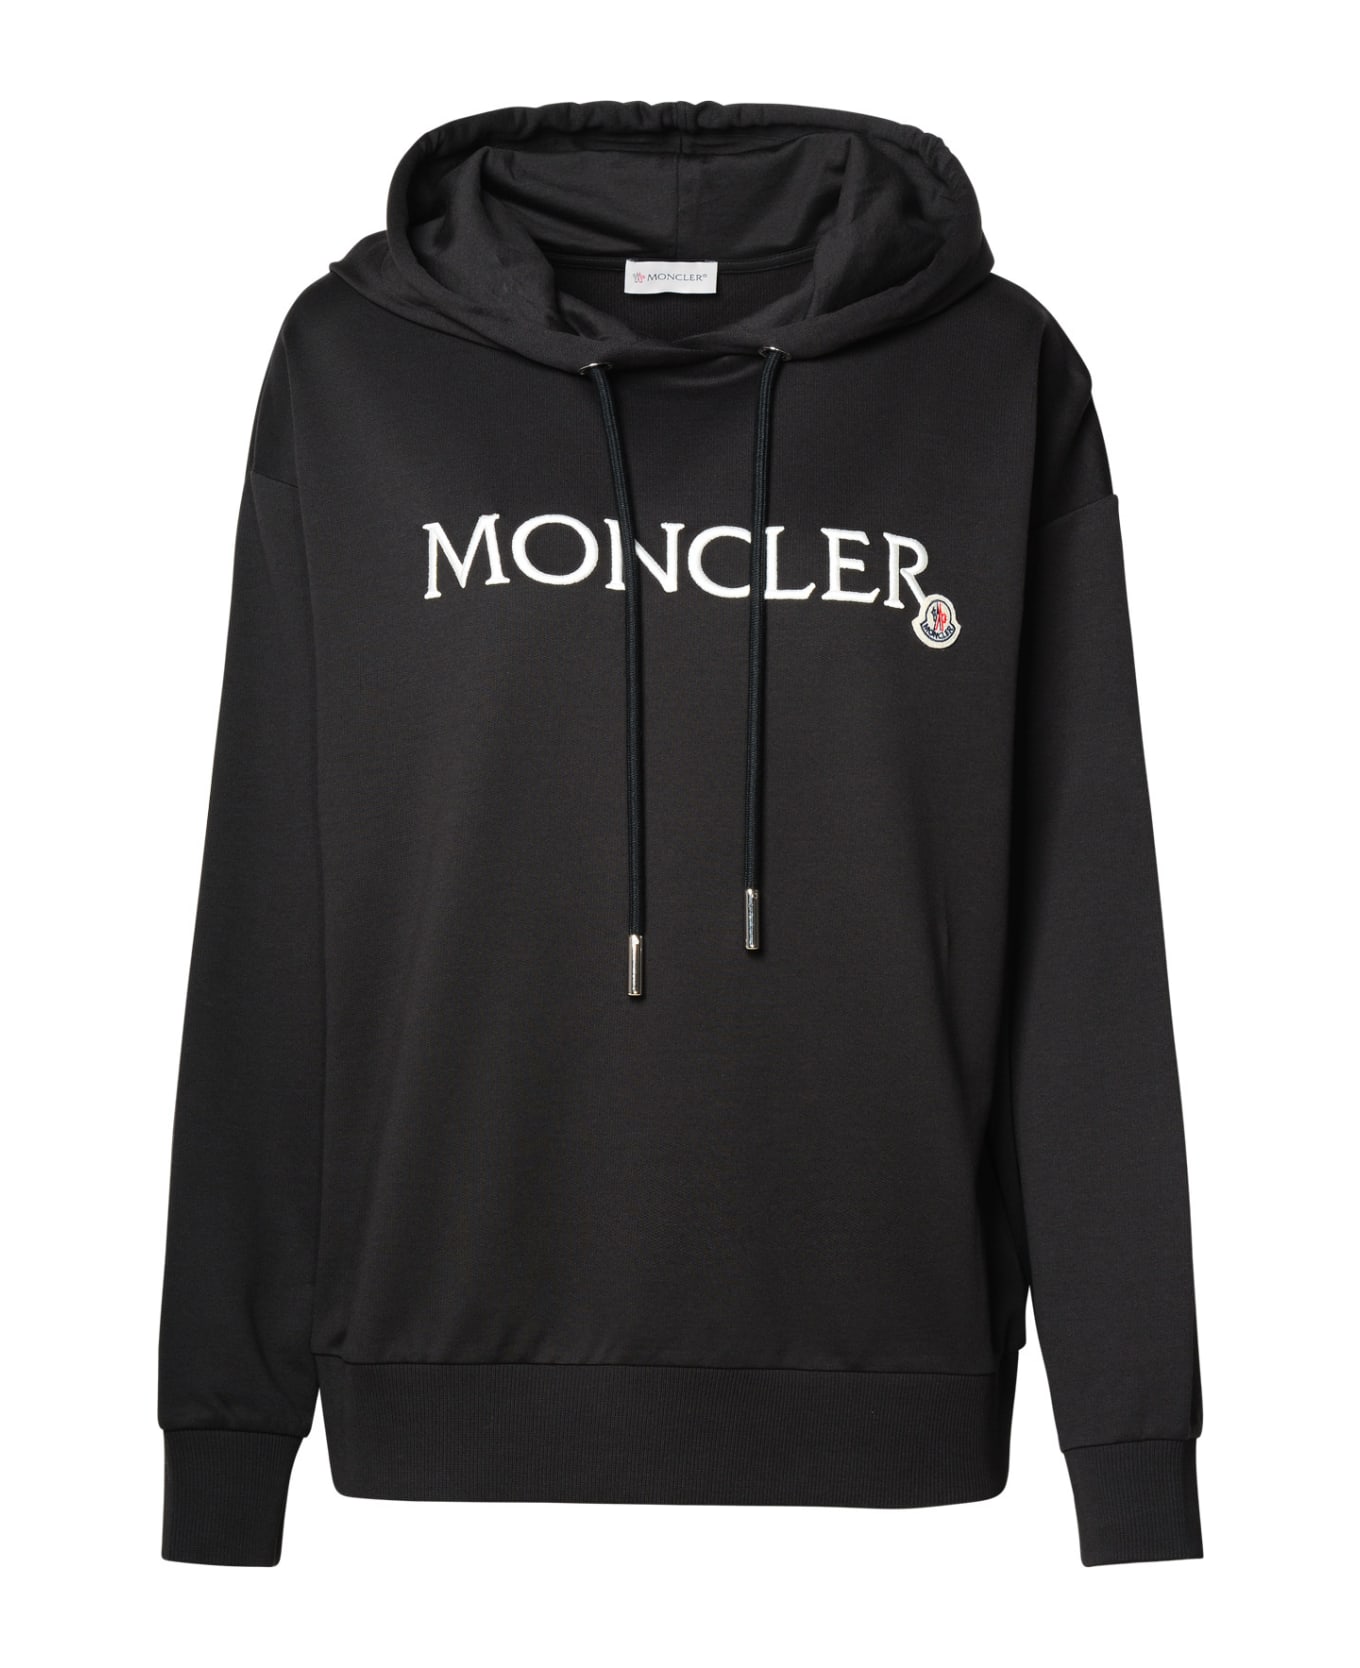 Moncler Black Cotton Sweatshirt - Black フリース